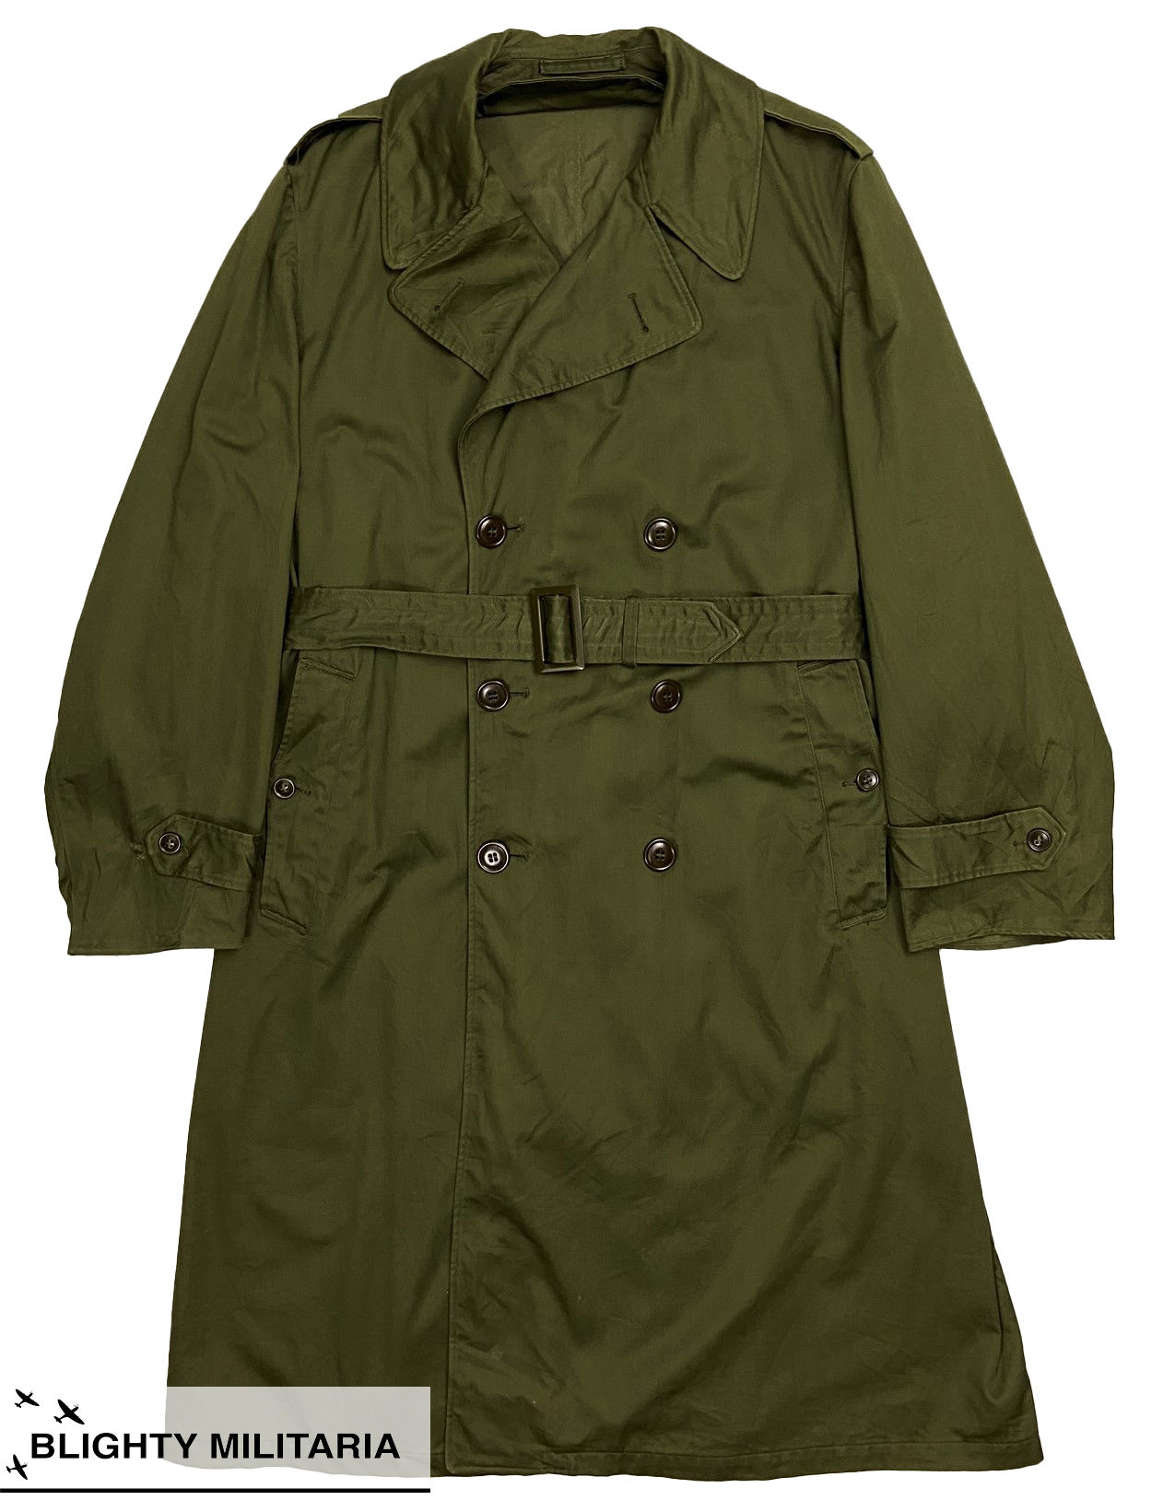 Original 1953 Dated US Army O.G. 107 Raincoat - Size Medium Regular